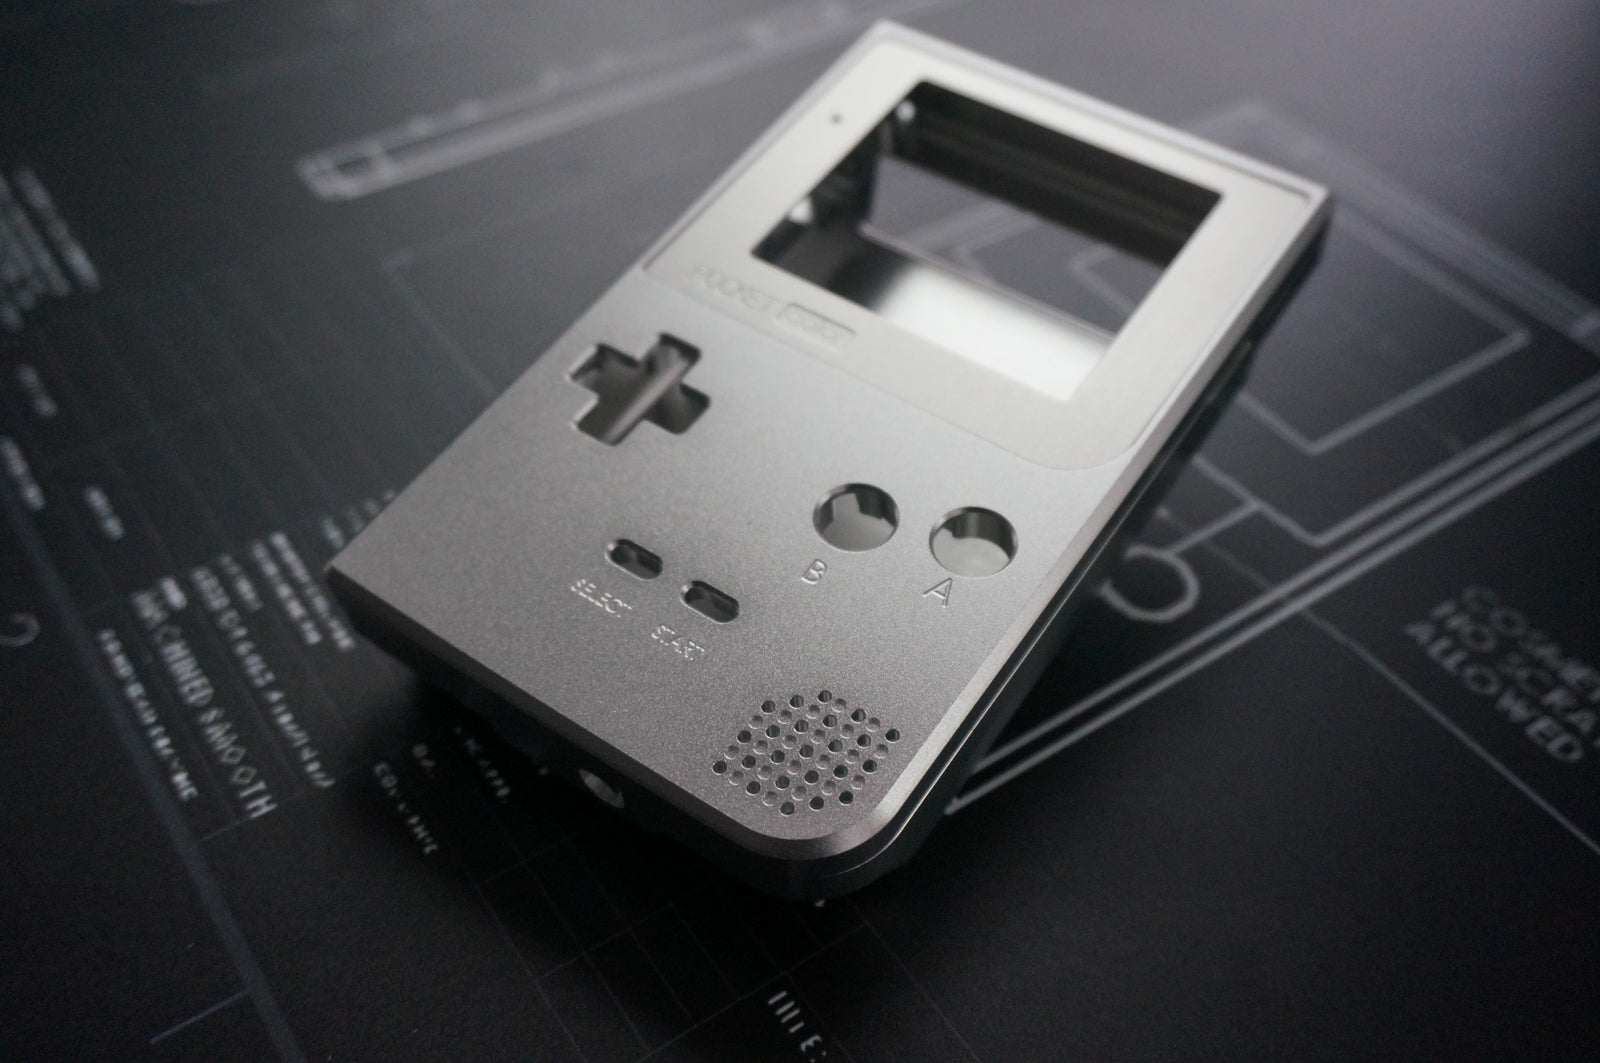 Cache piles - Game Boy Pocket